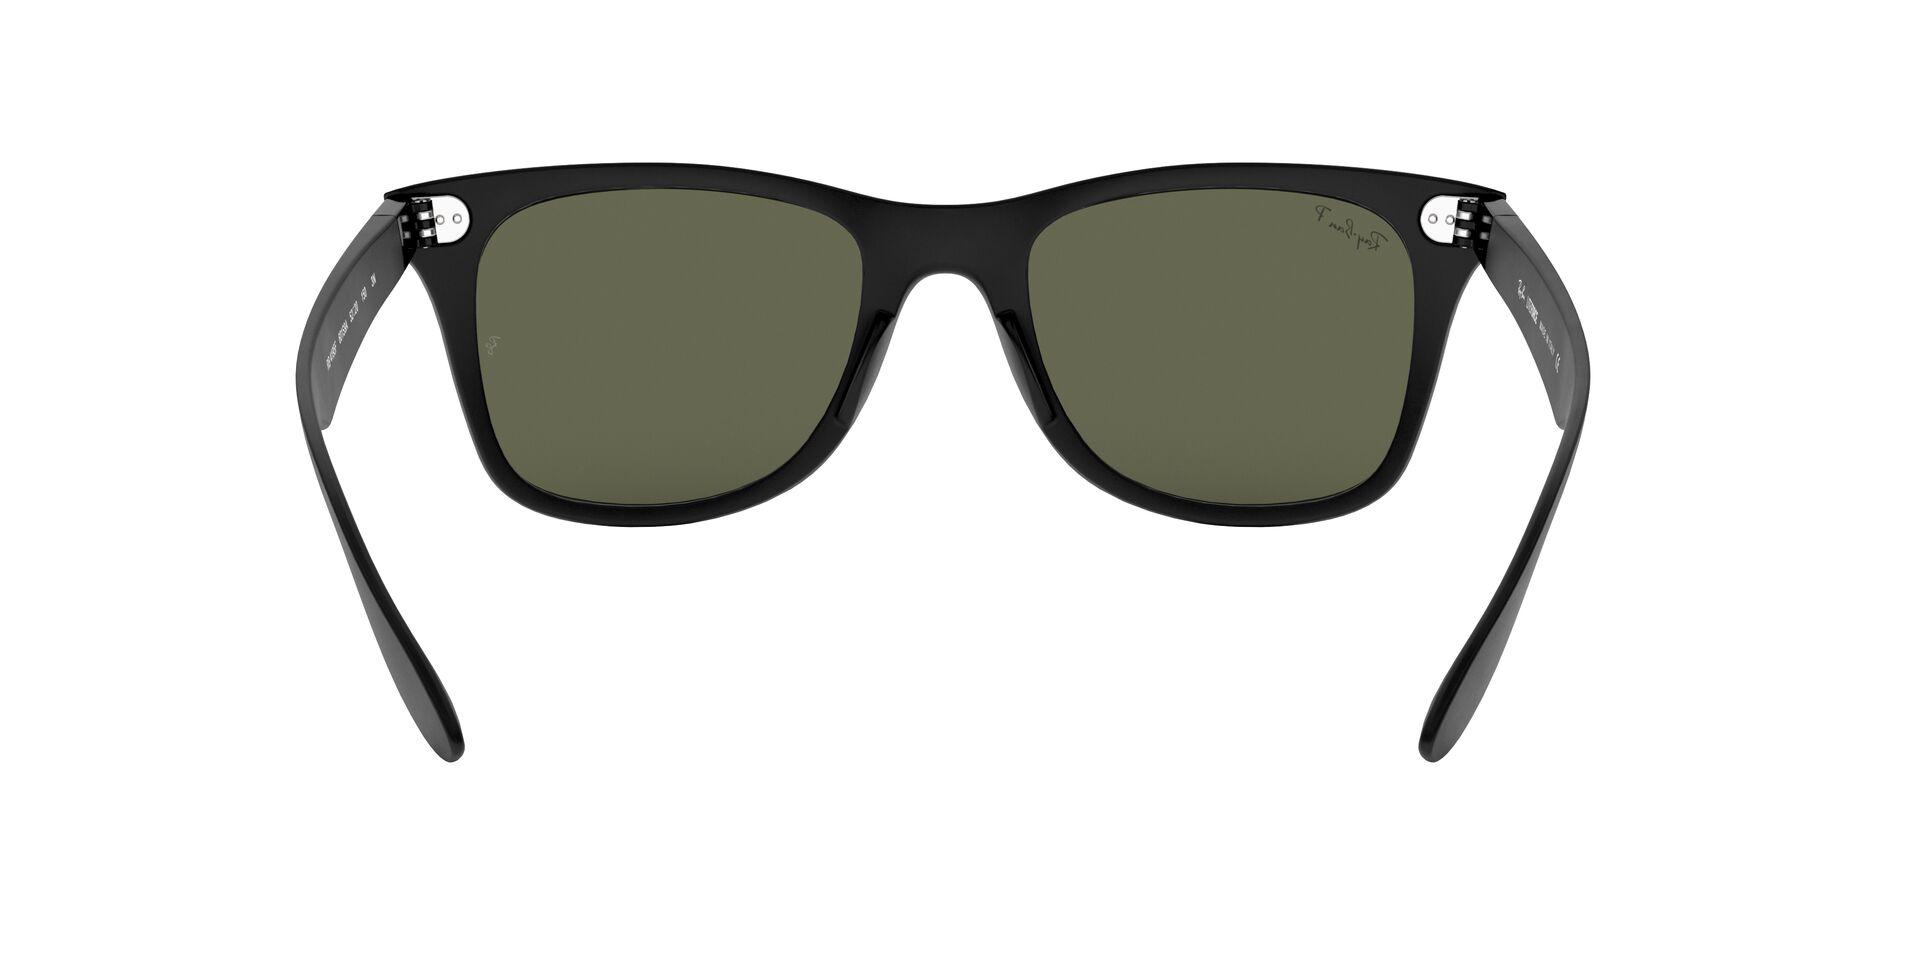 Mắt Kính Ray-Ban Wayfarer Liteforce - RB4195F 601S9A -Sunglasses